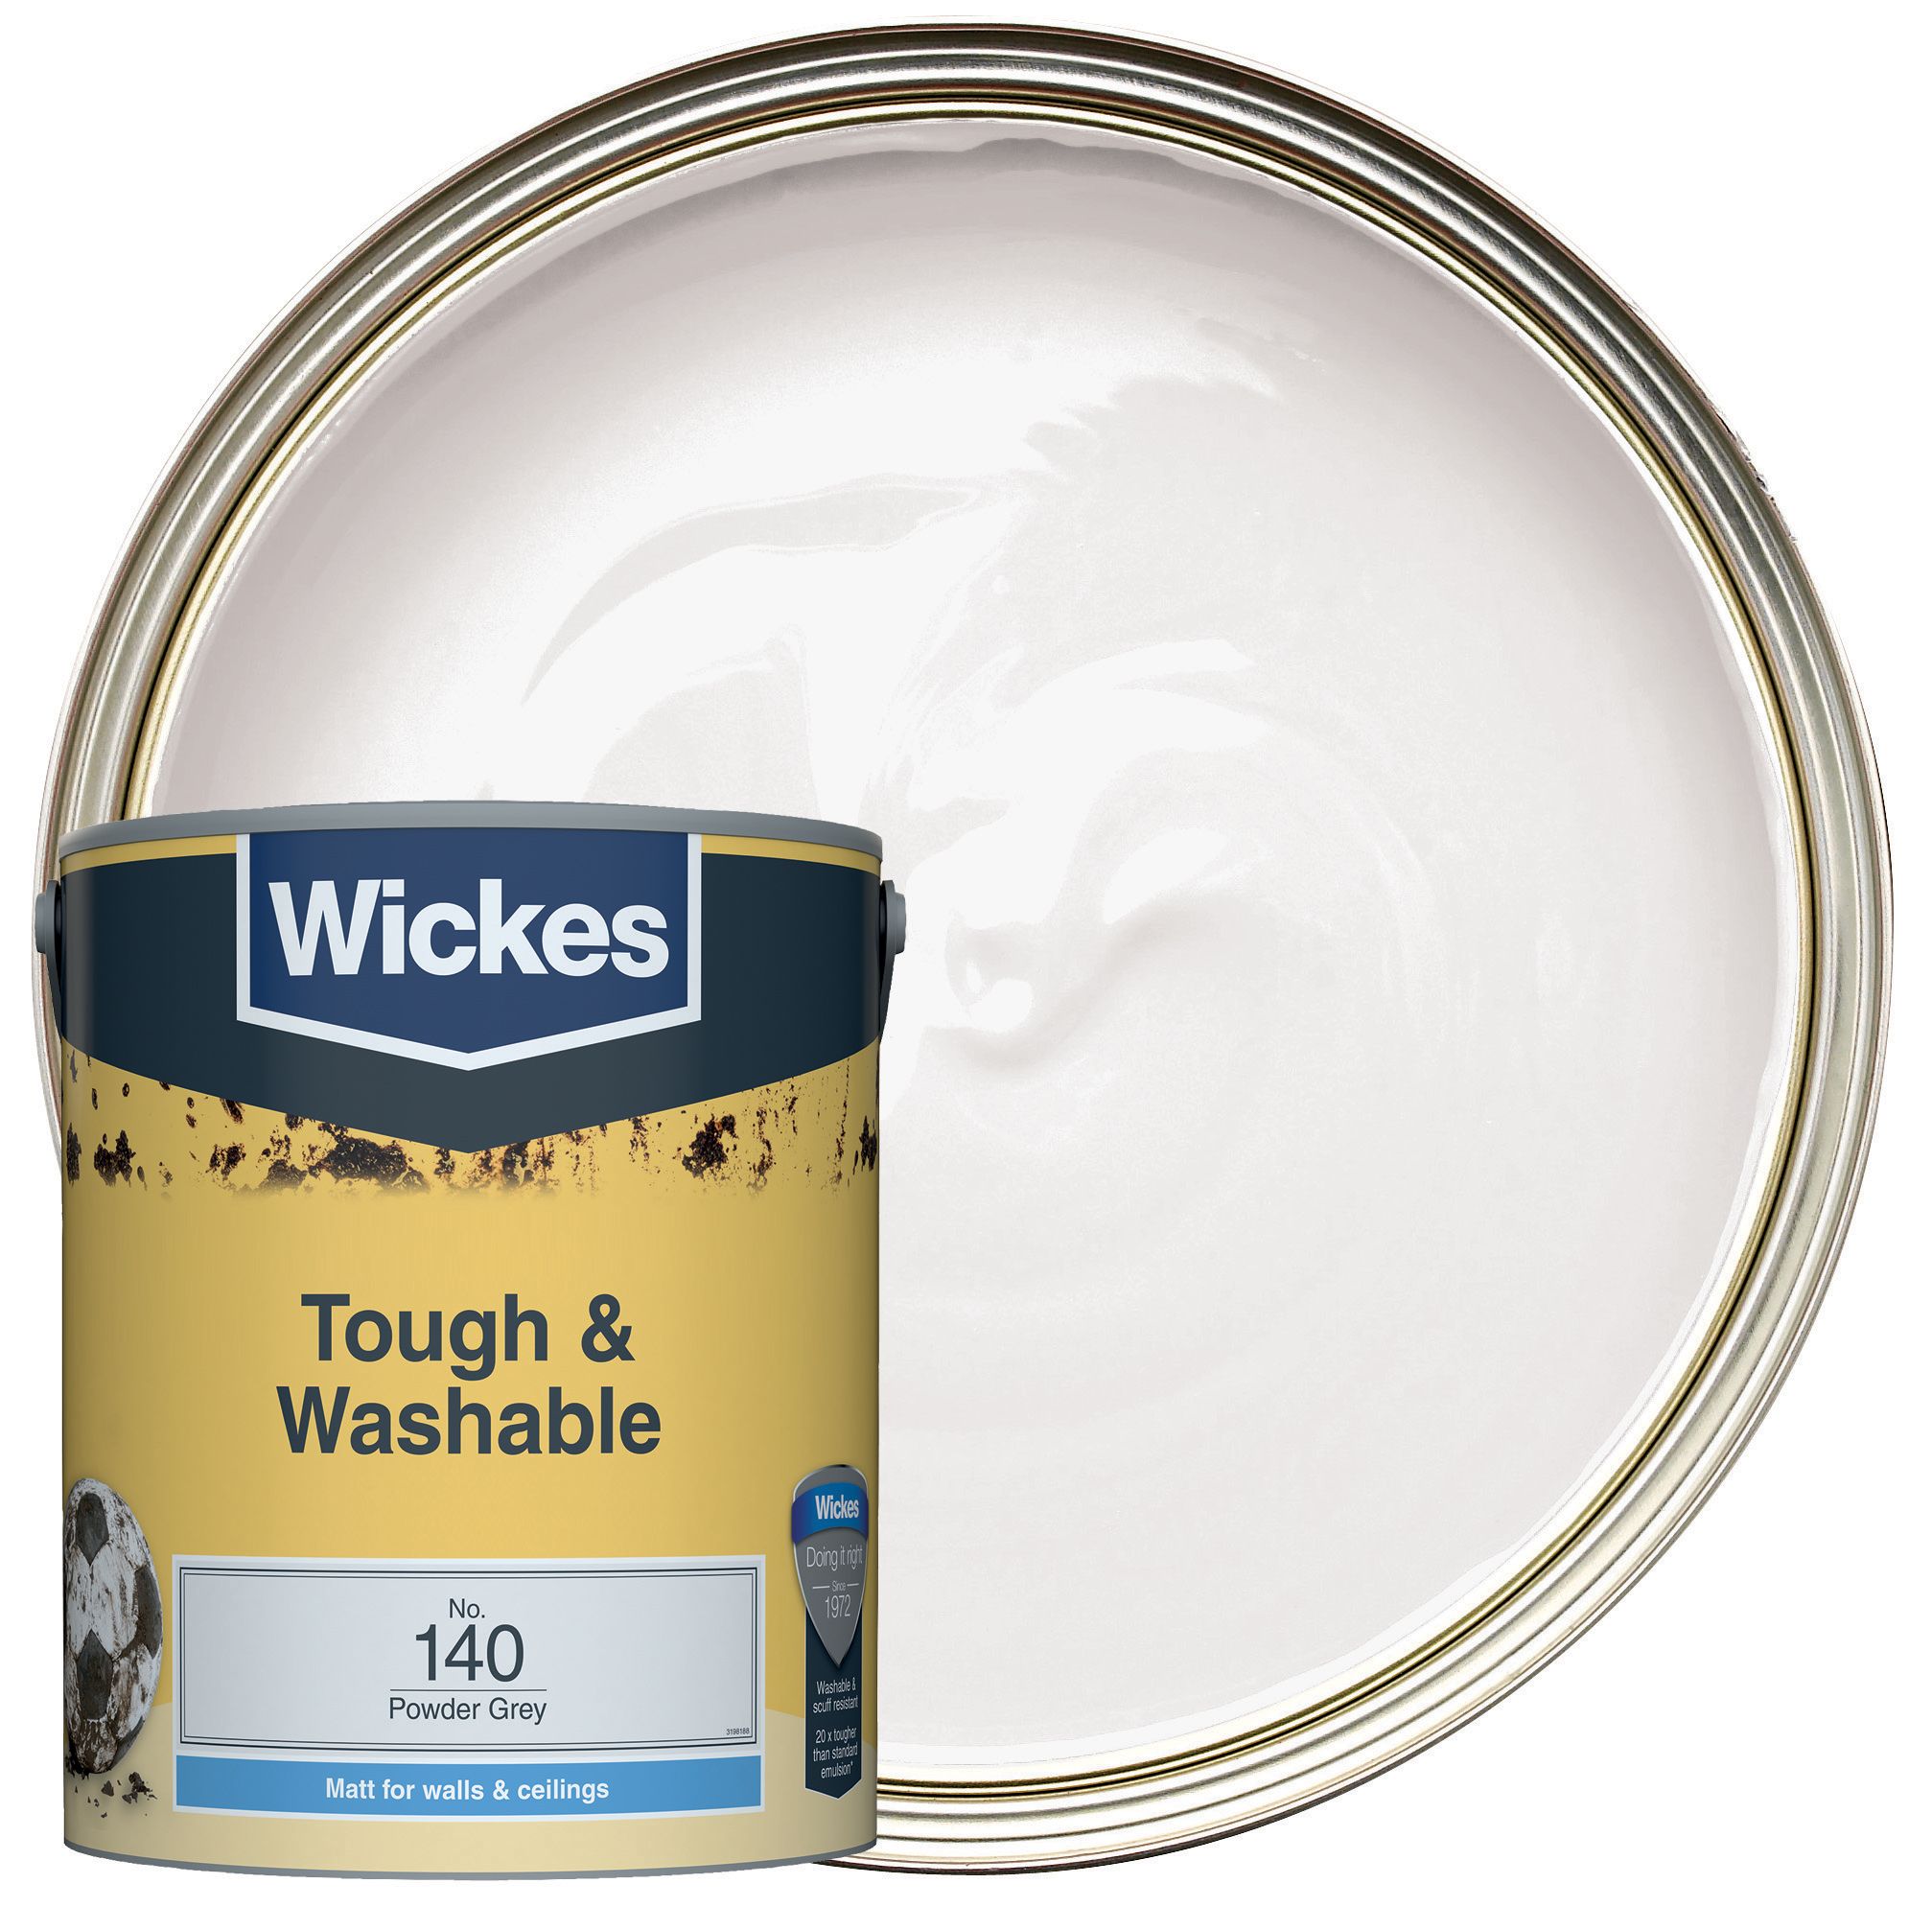 Wickes Tough & Washable Matt Emulsion Paint - No. 140 Powder Grey 5L